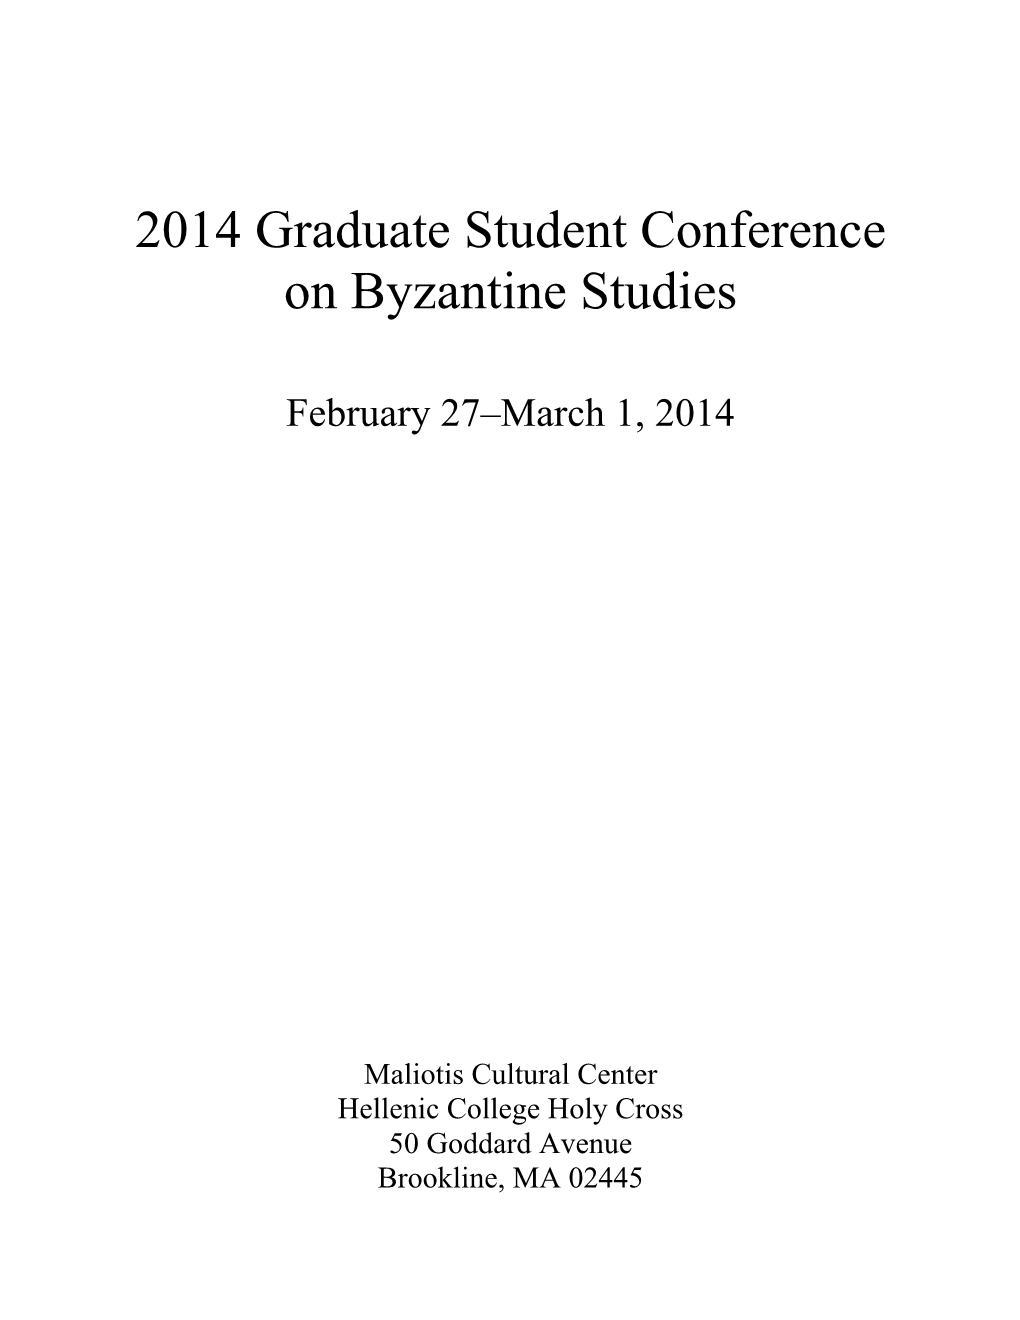 2014 Graduate Student Conference on Byzantine Studies